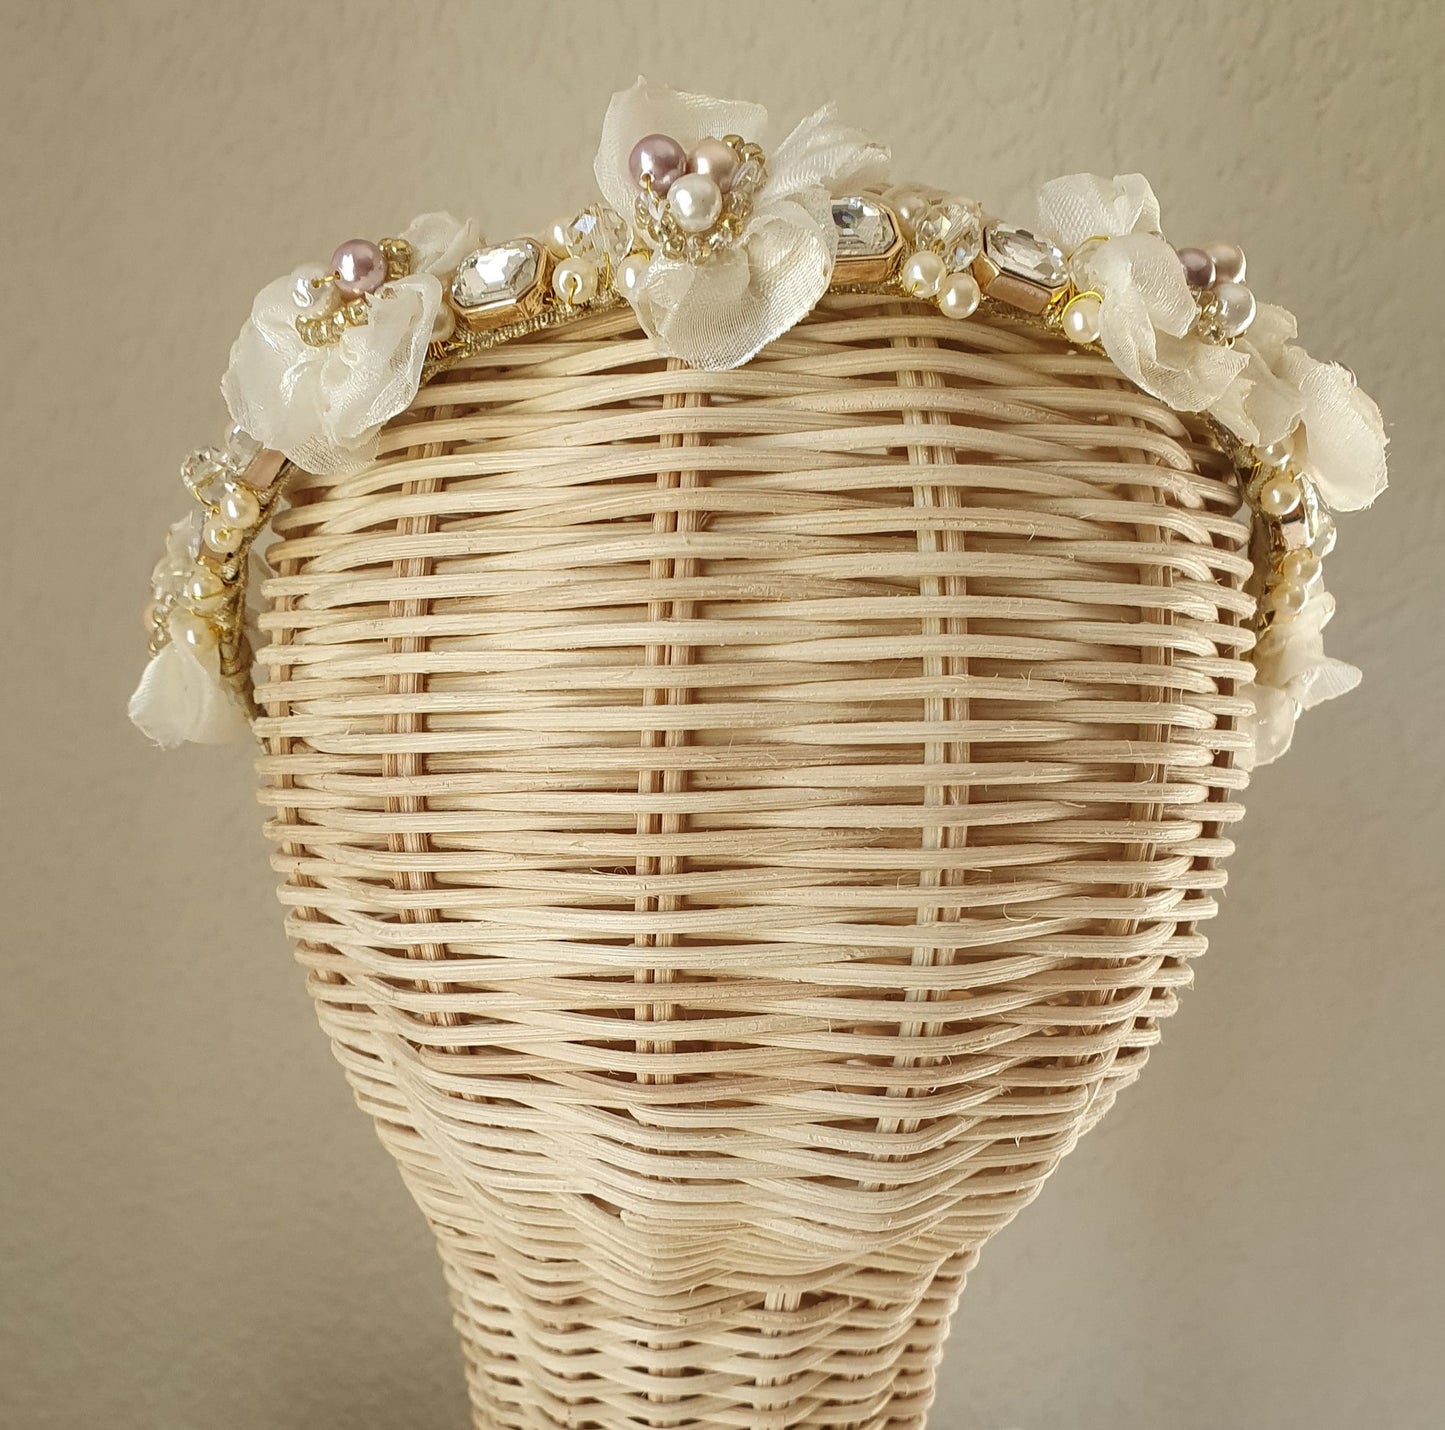 Handmade headband ivory colored with pearls organza fabric - Beautiful headband, unique festive diadem, wedding, special occasion